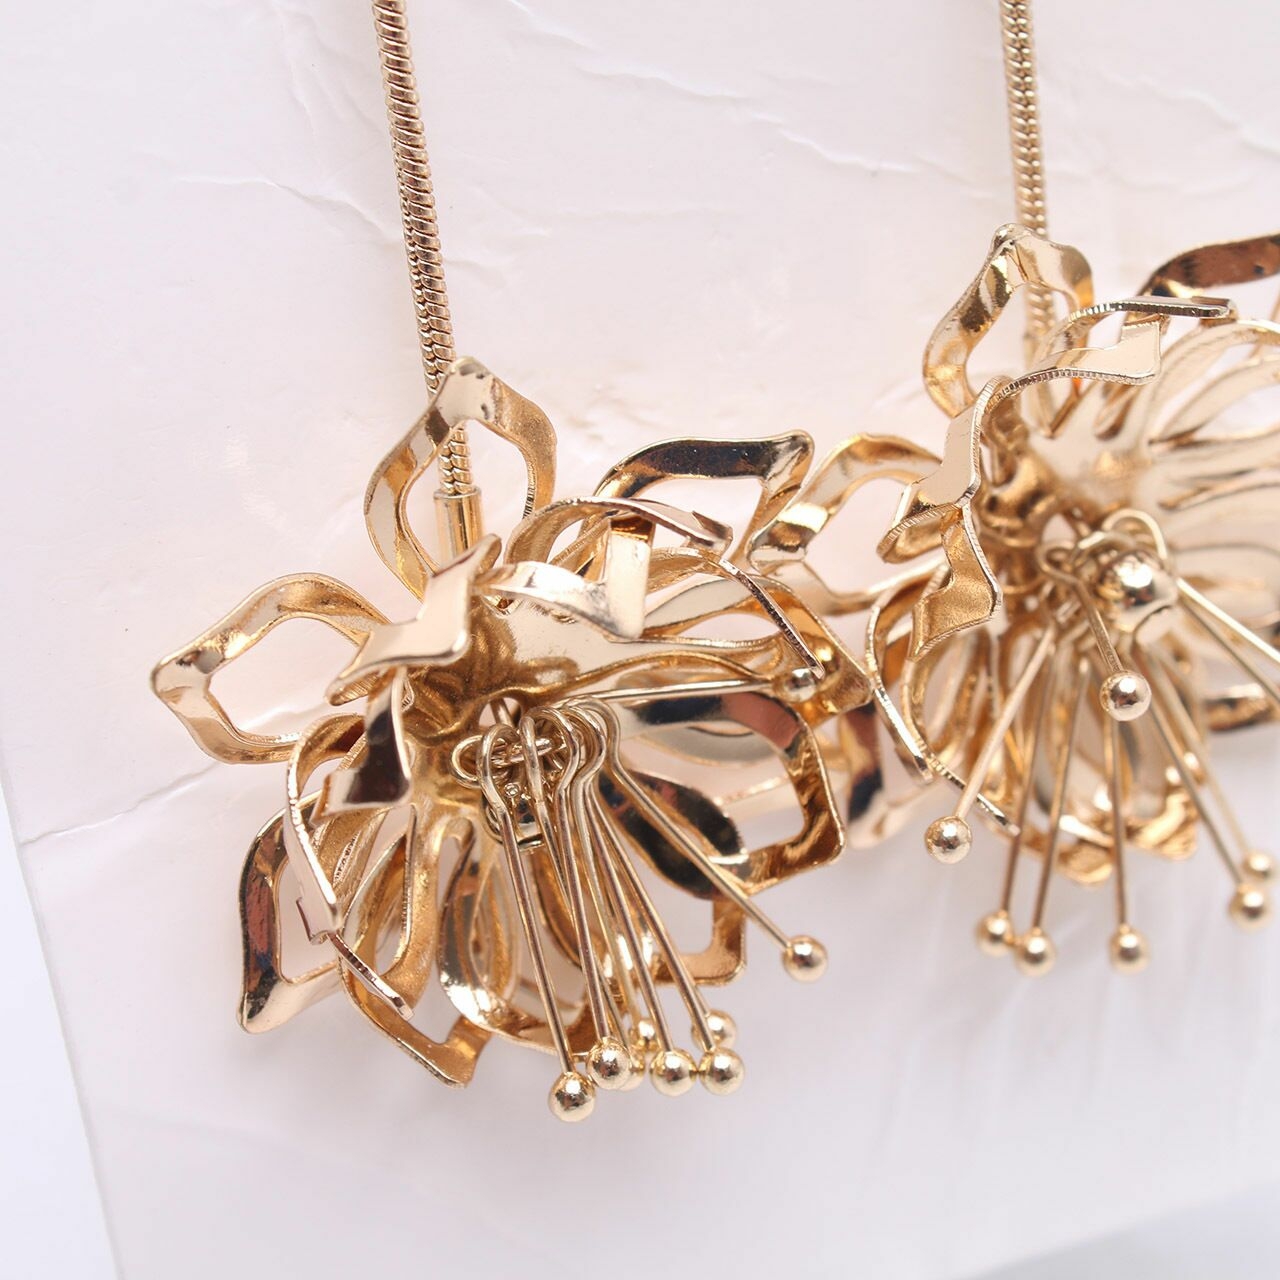 H&M Gold Earrings Jewelry